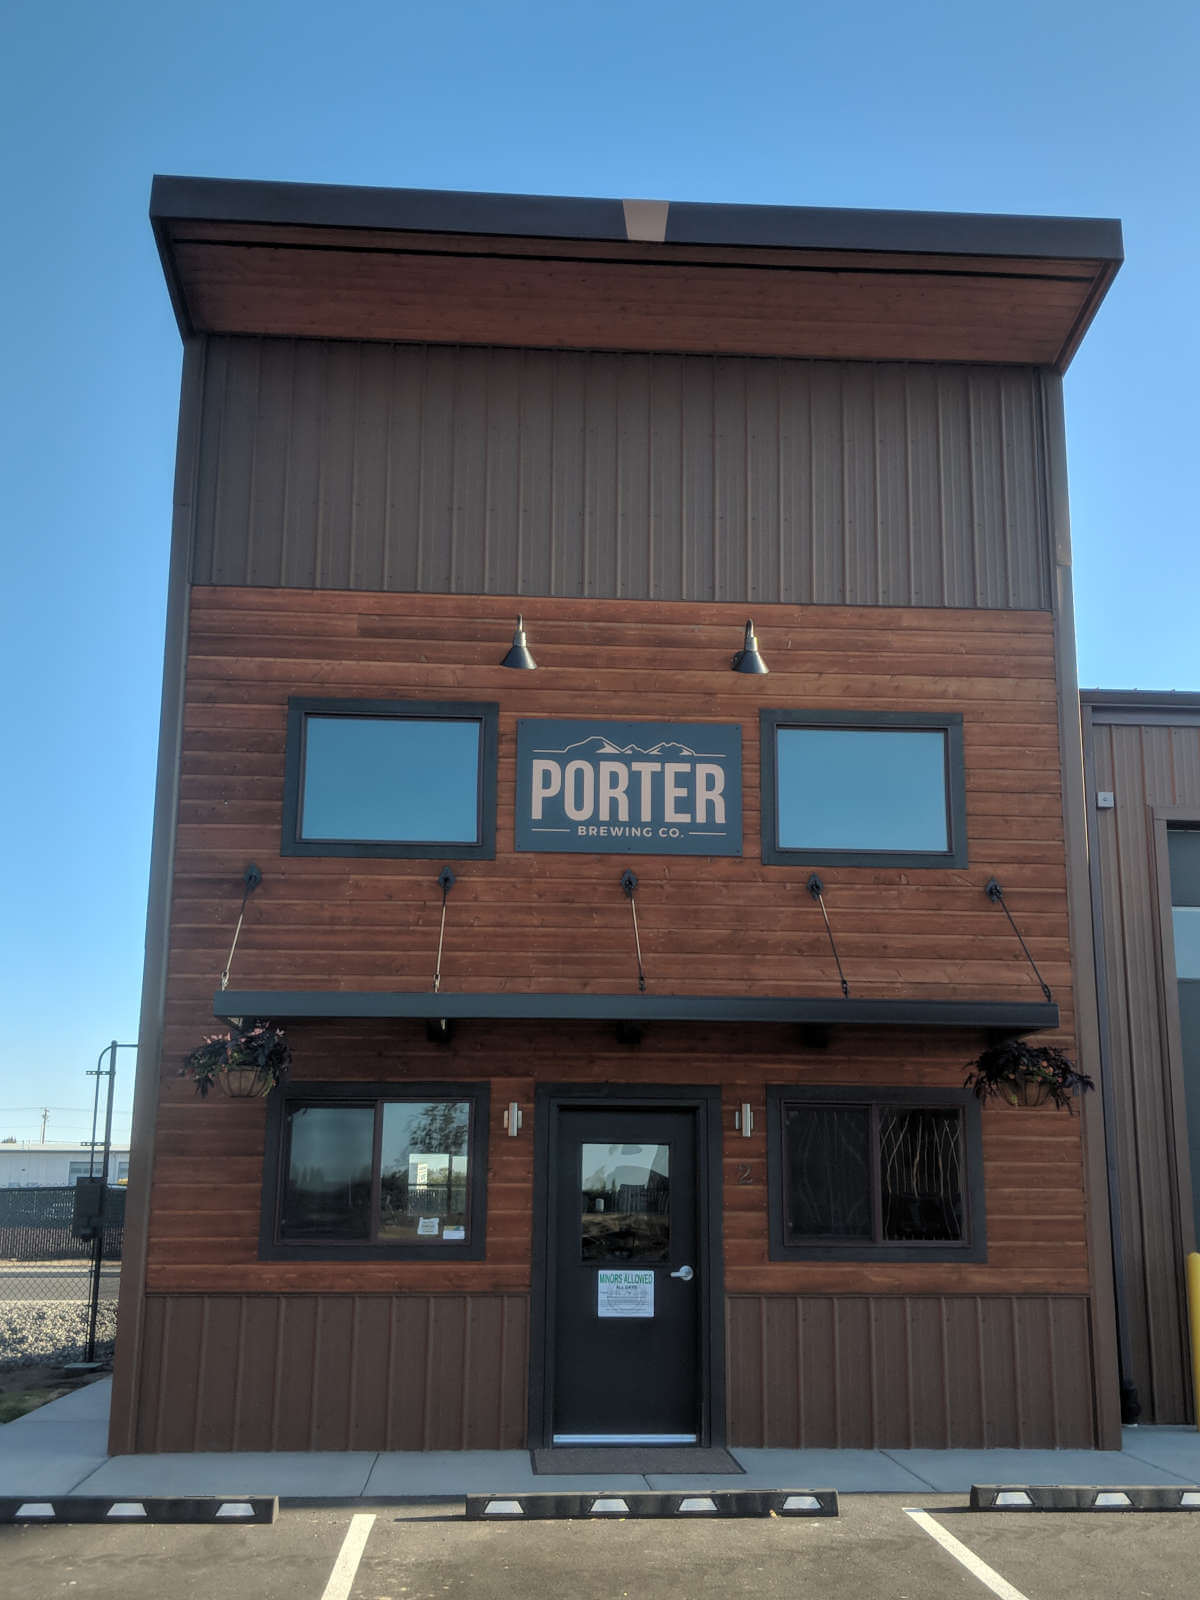 First look at Porter Brewing, Redmond, Oregon